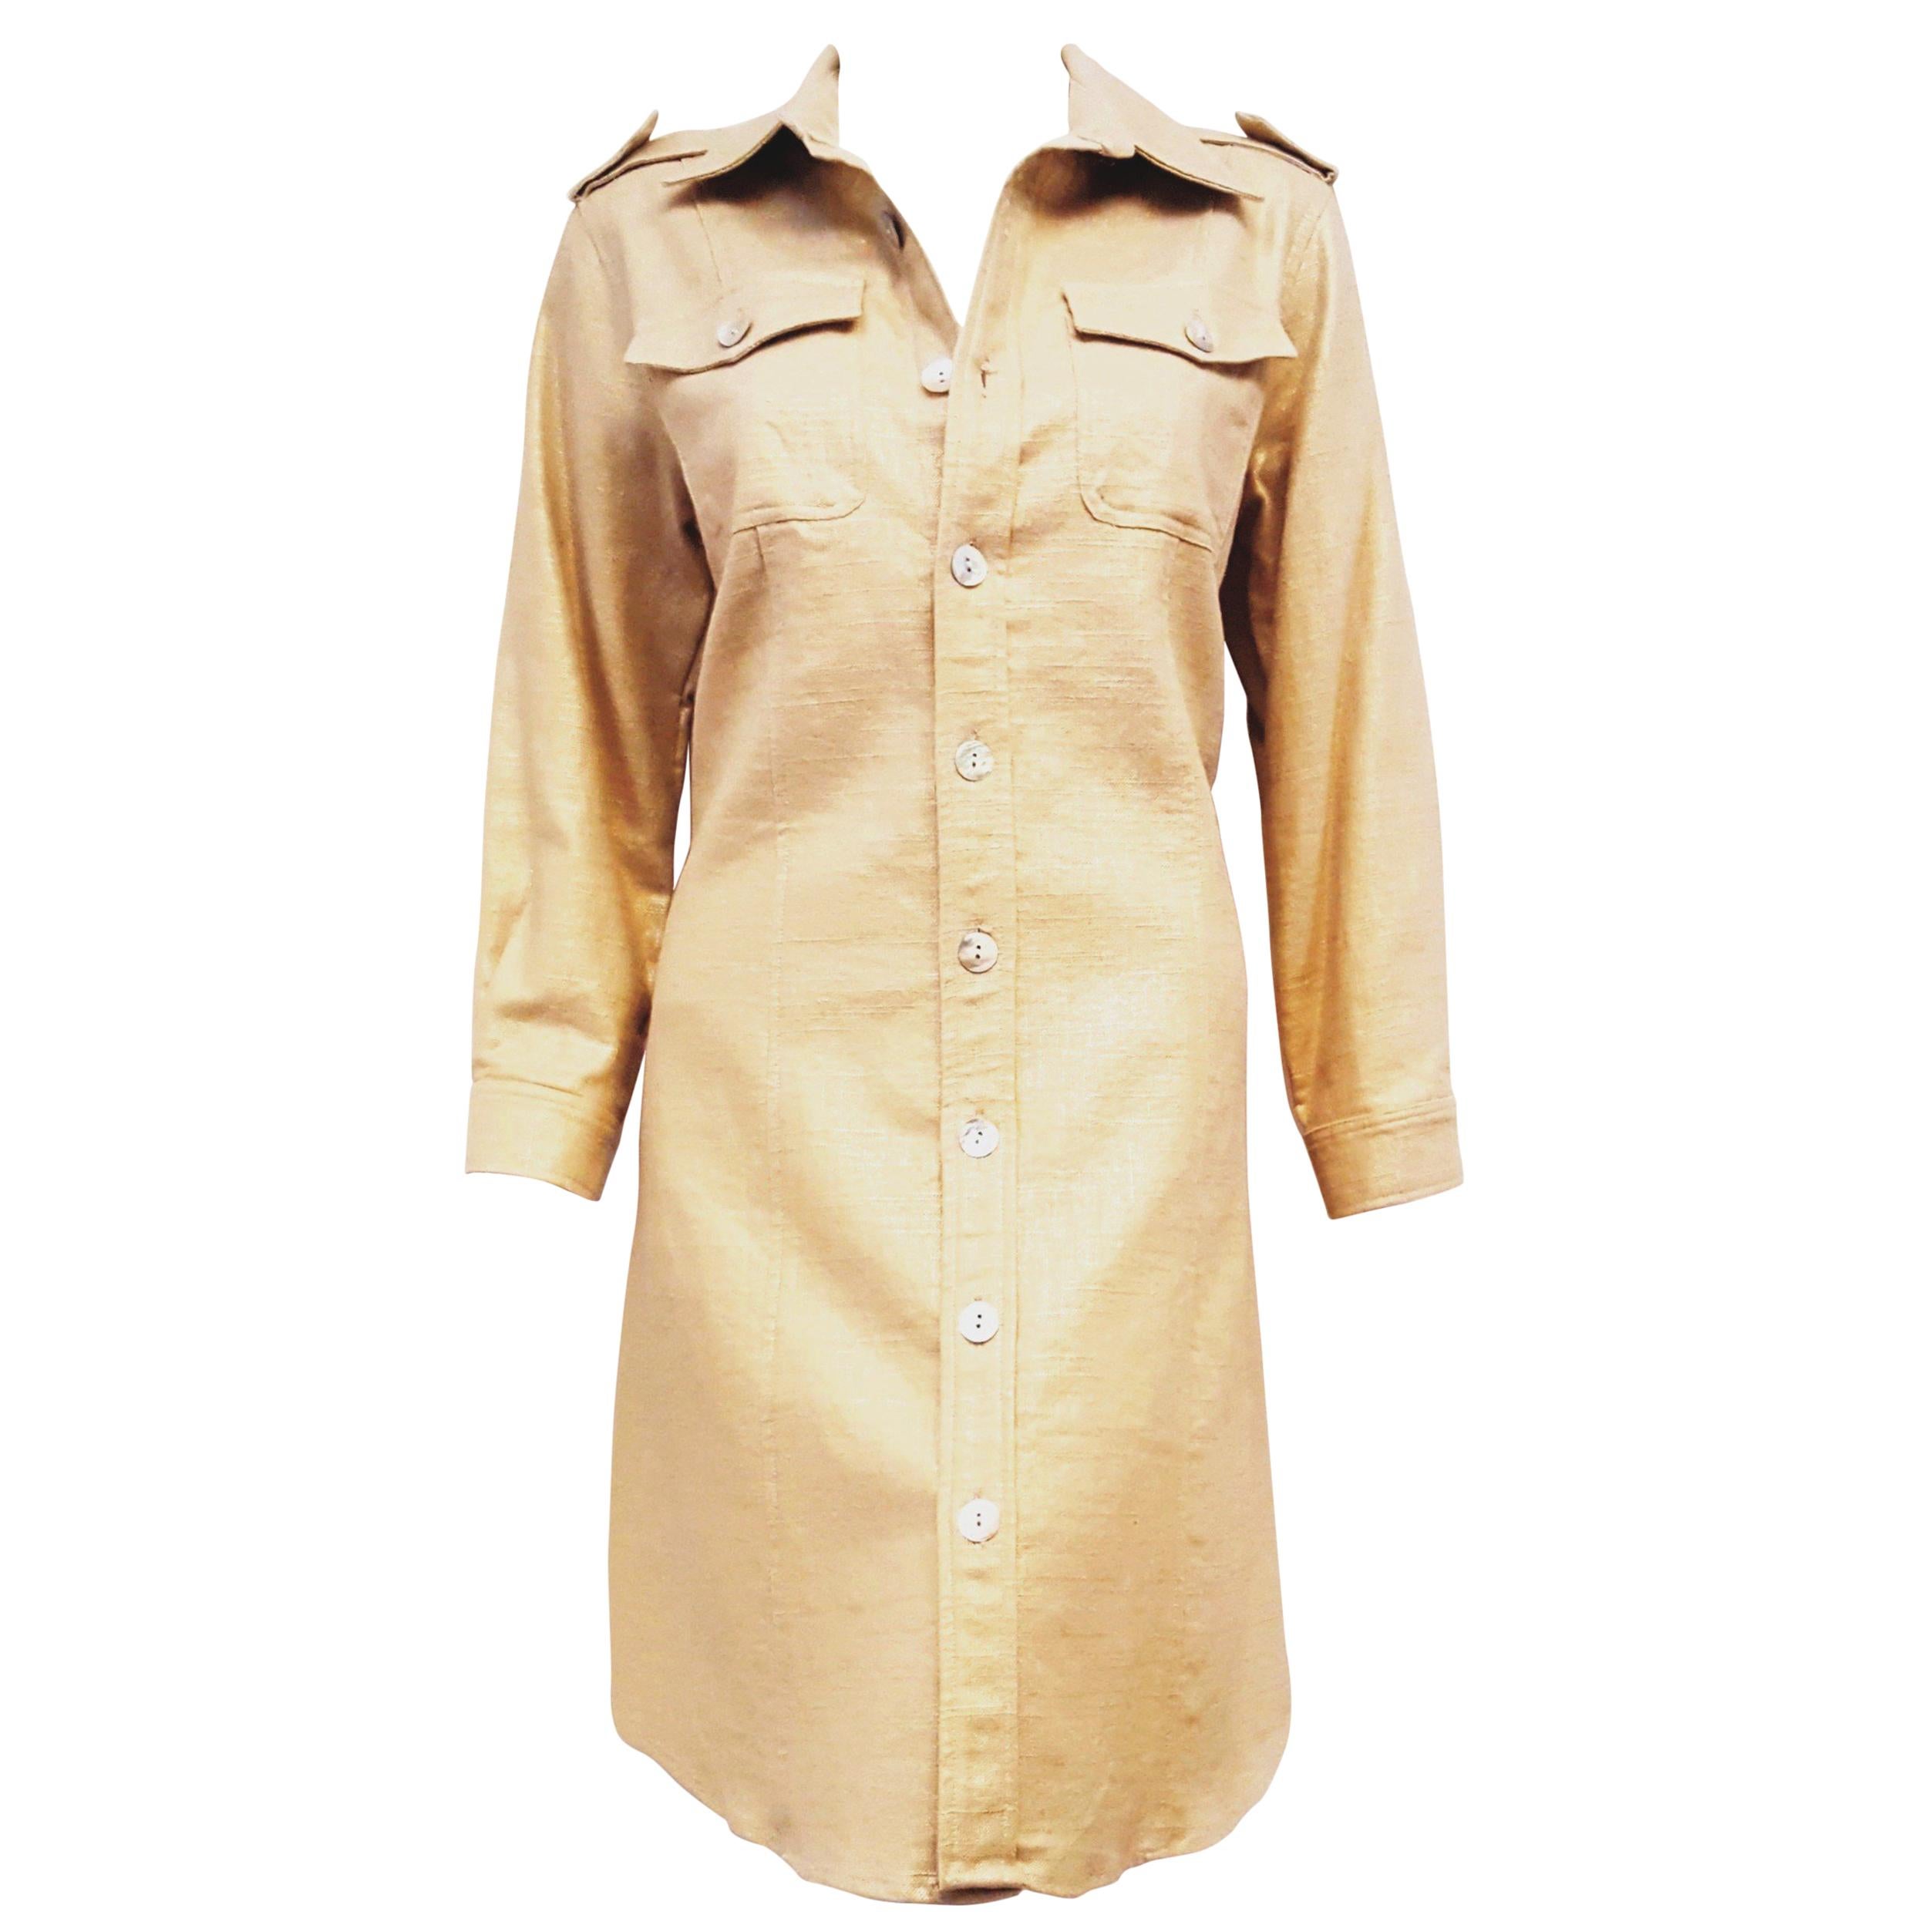 C J Laing Gold Tone Metallic Linen Blend Long Sleeve Button Front Dress